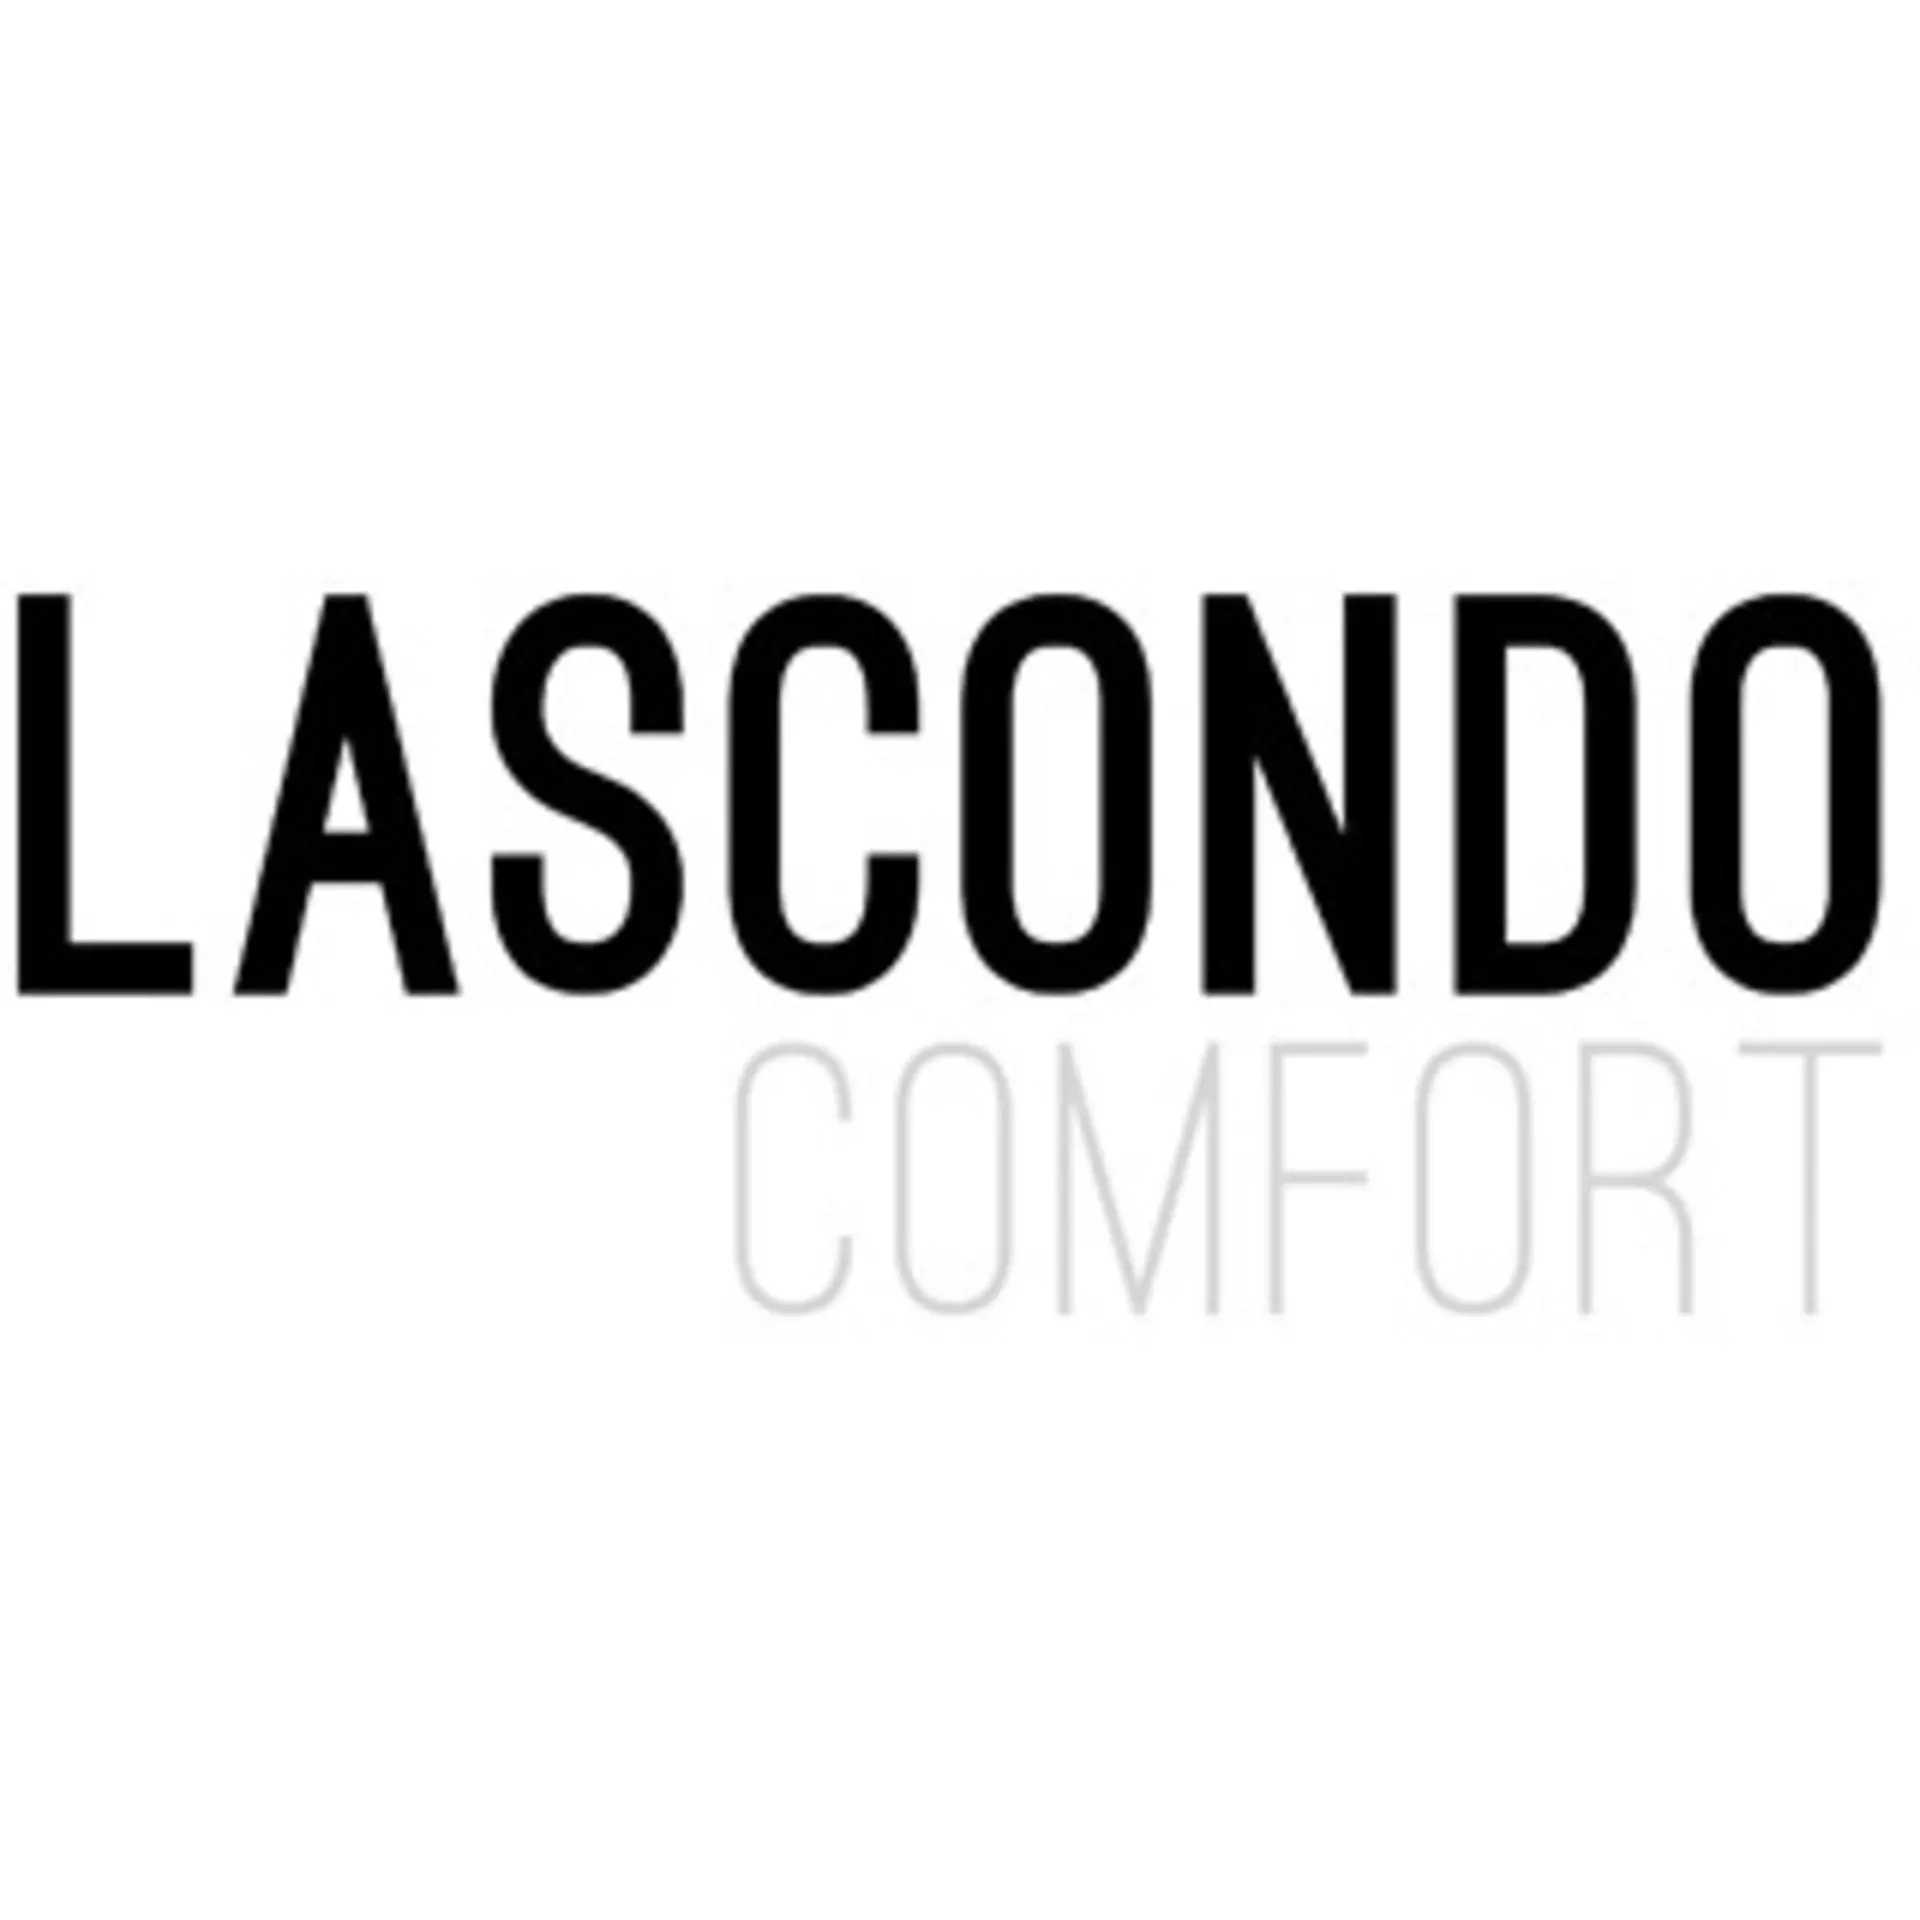 LASCONDO-Comfort Logo